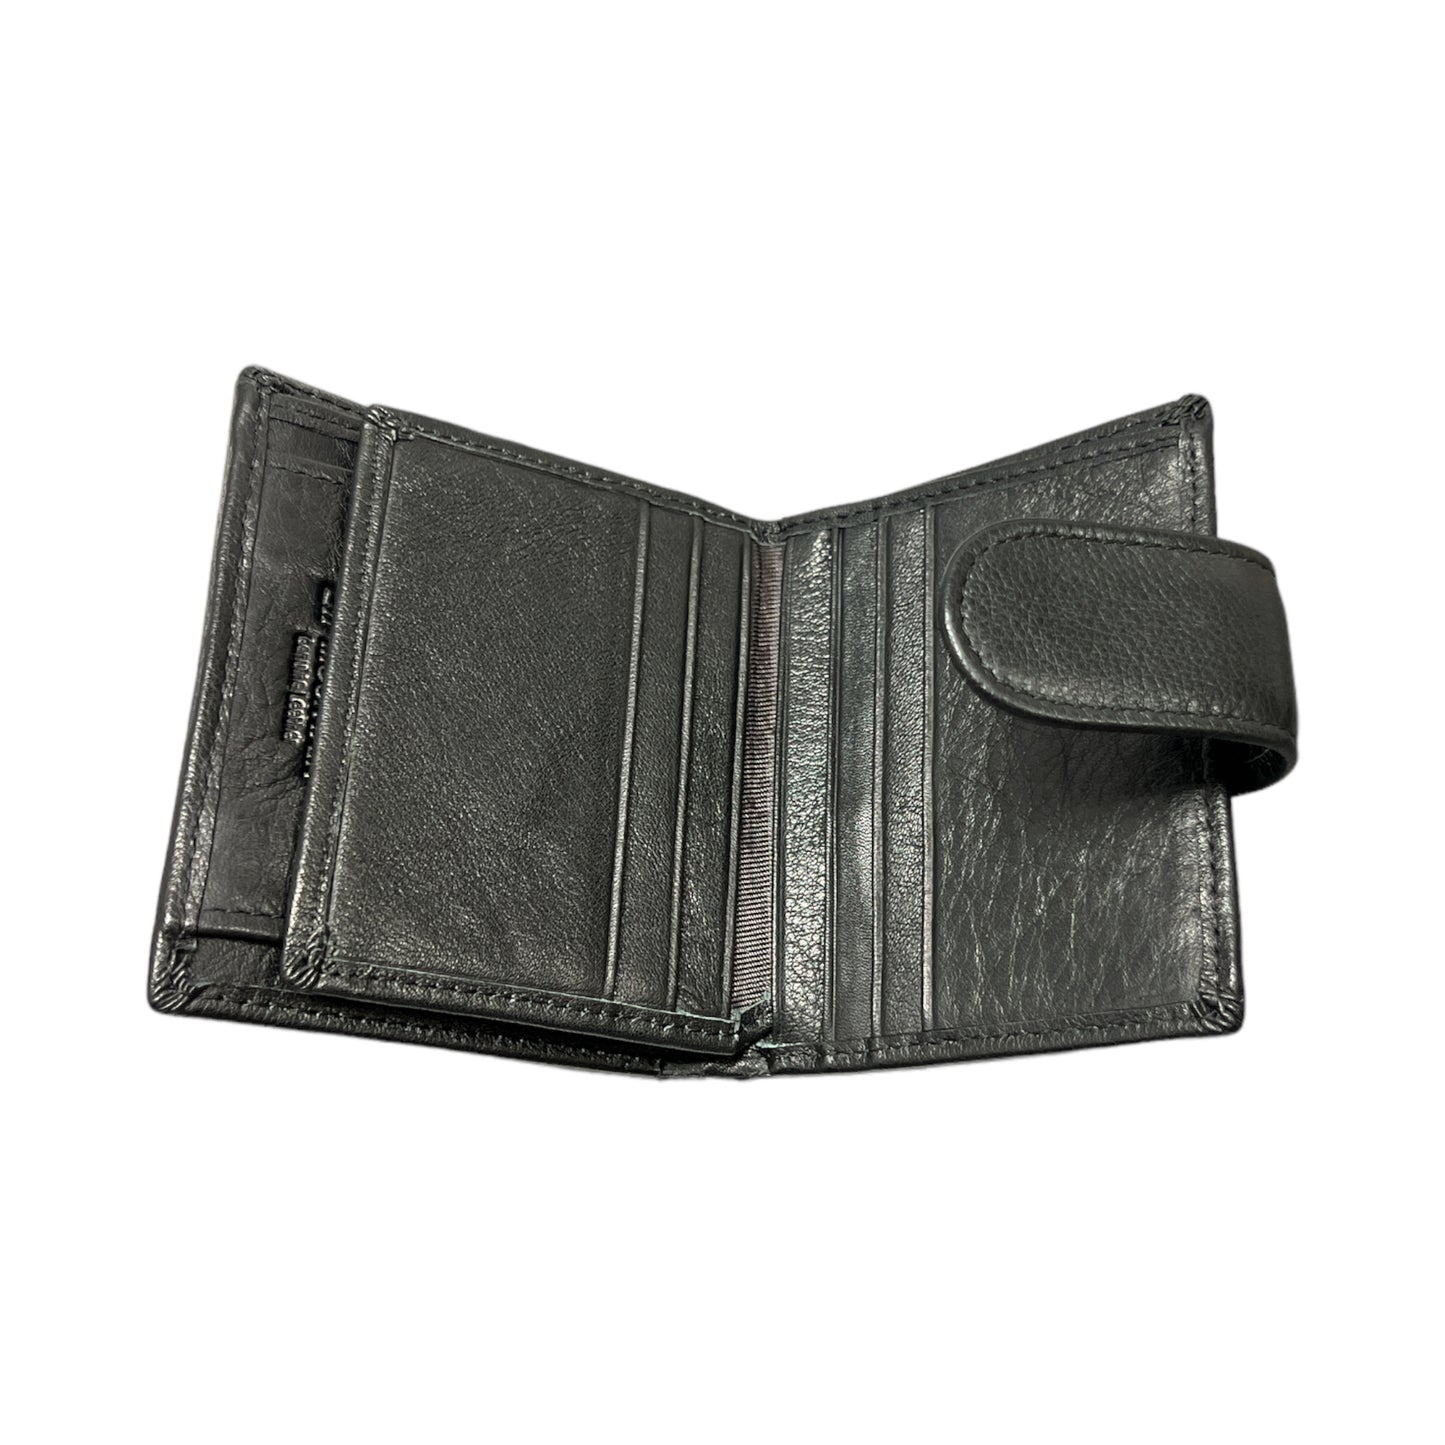 Men's Wallet - Genuine Leather - 7 Card Slots plus Coins Pocket